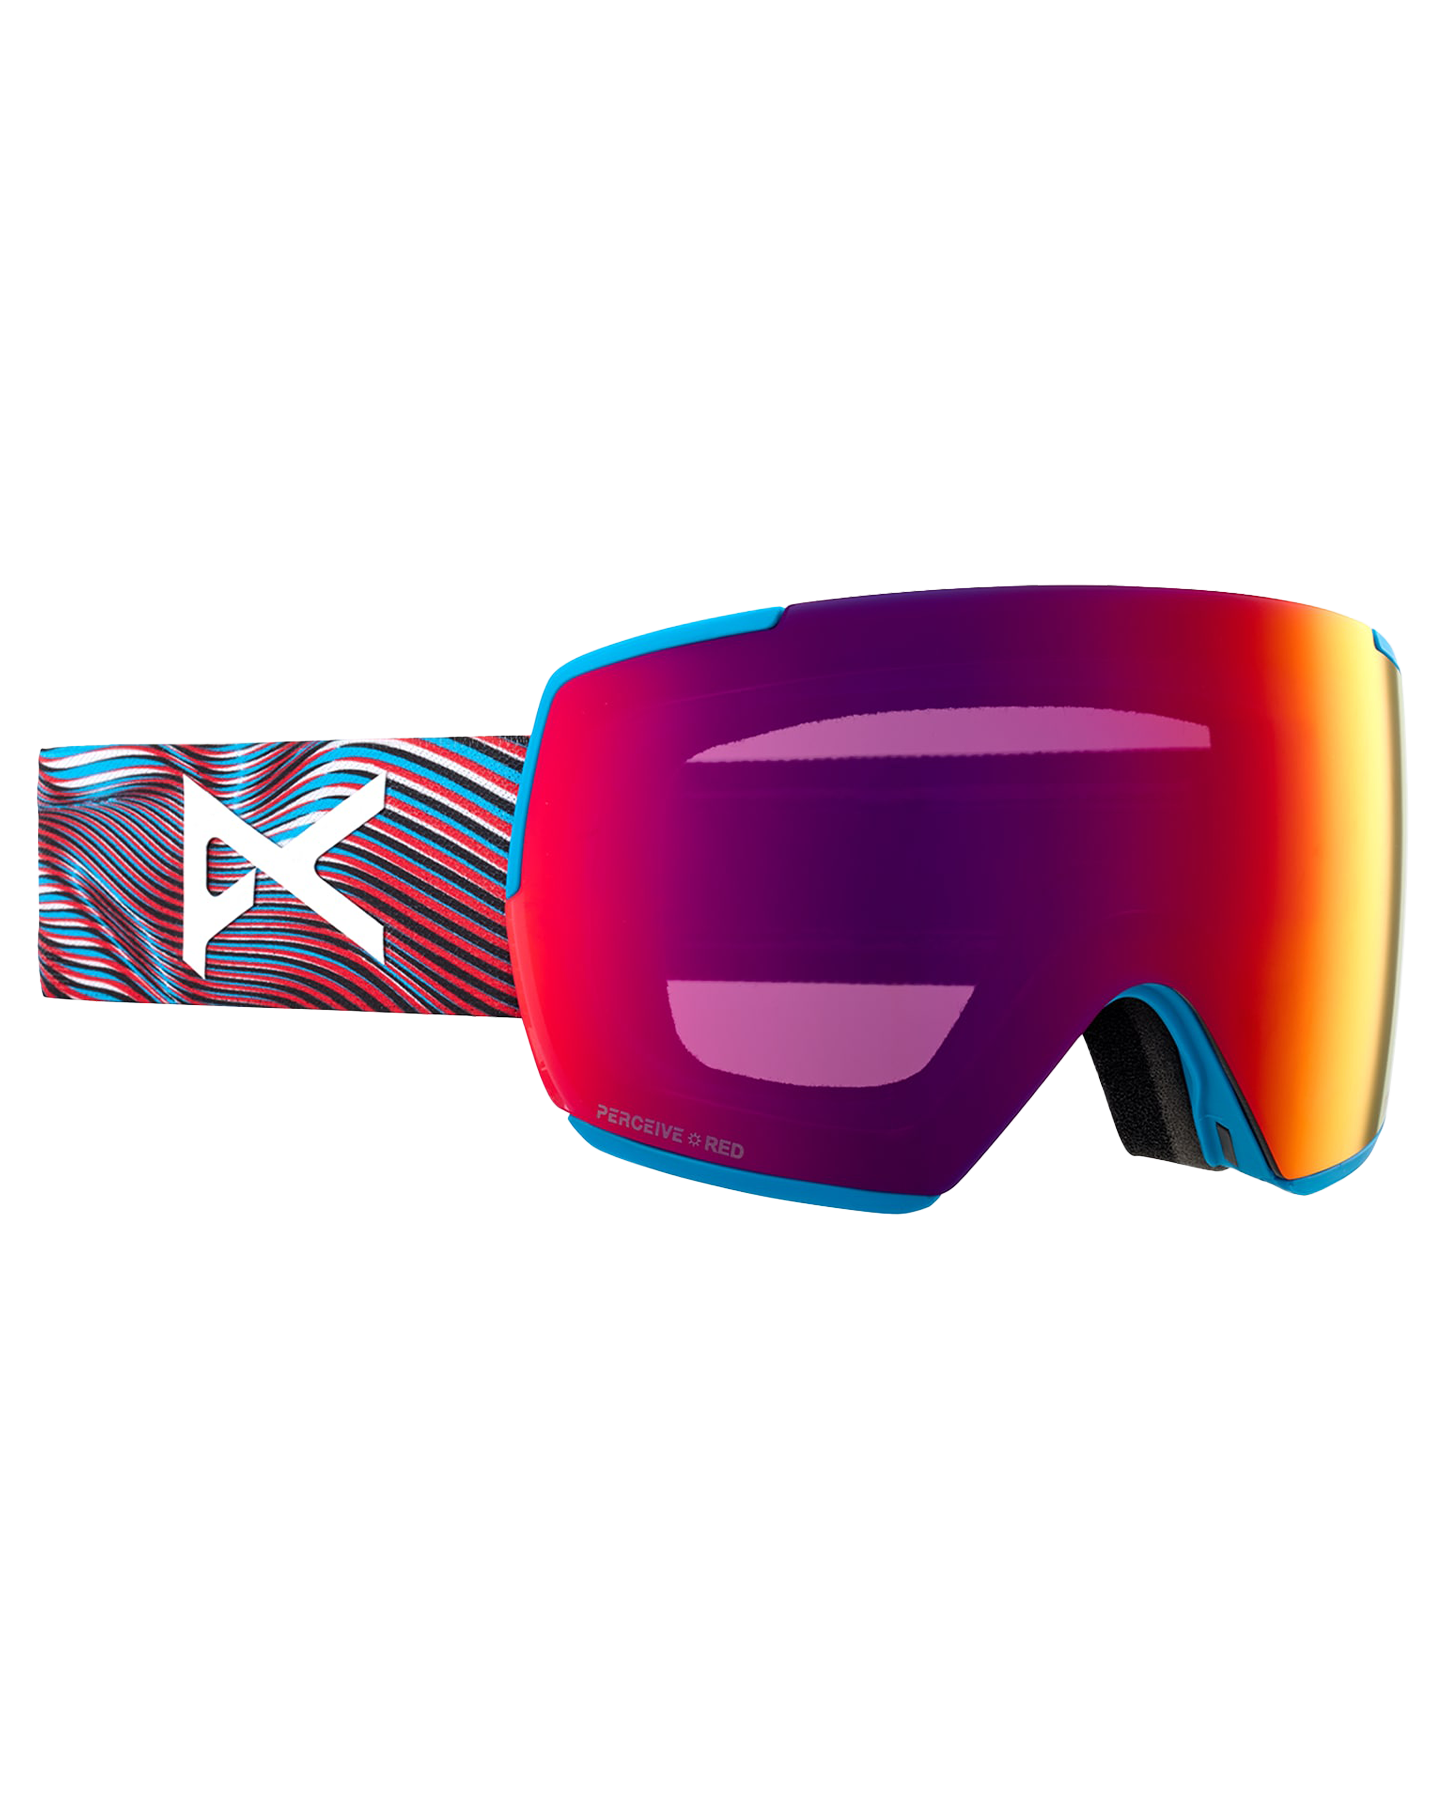 Anon M5 Low Bridge Snow Goggles - Waves/Perceive Sunny Red Lens Men's Snow Goggles - Trojan Wake Ski Snow